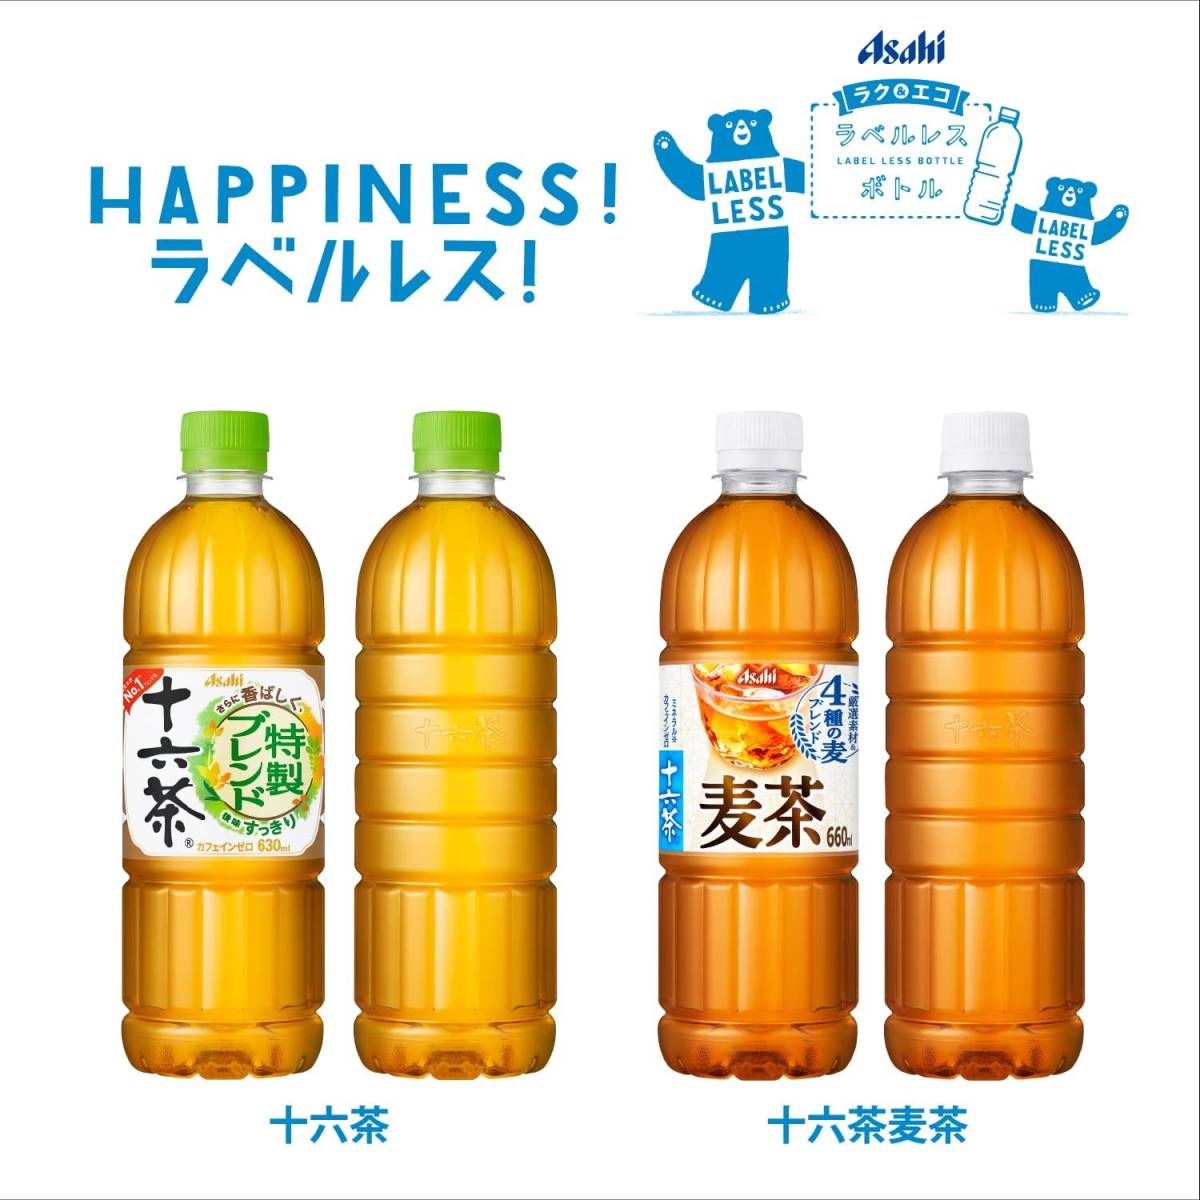 630 мм литров (x 24) Asahi напиток Asahi 10 шесть чай 630ml×24шт.@[ чай ] [ non Cafe in ]